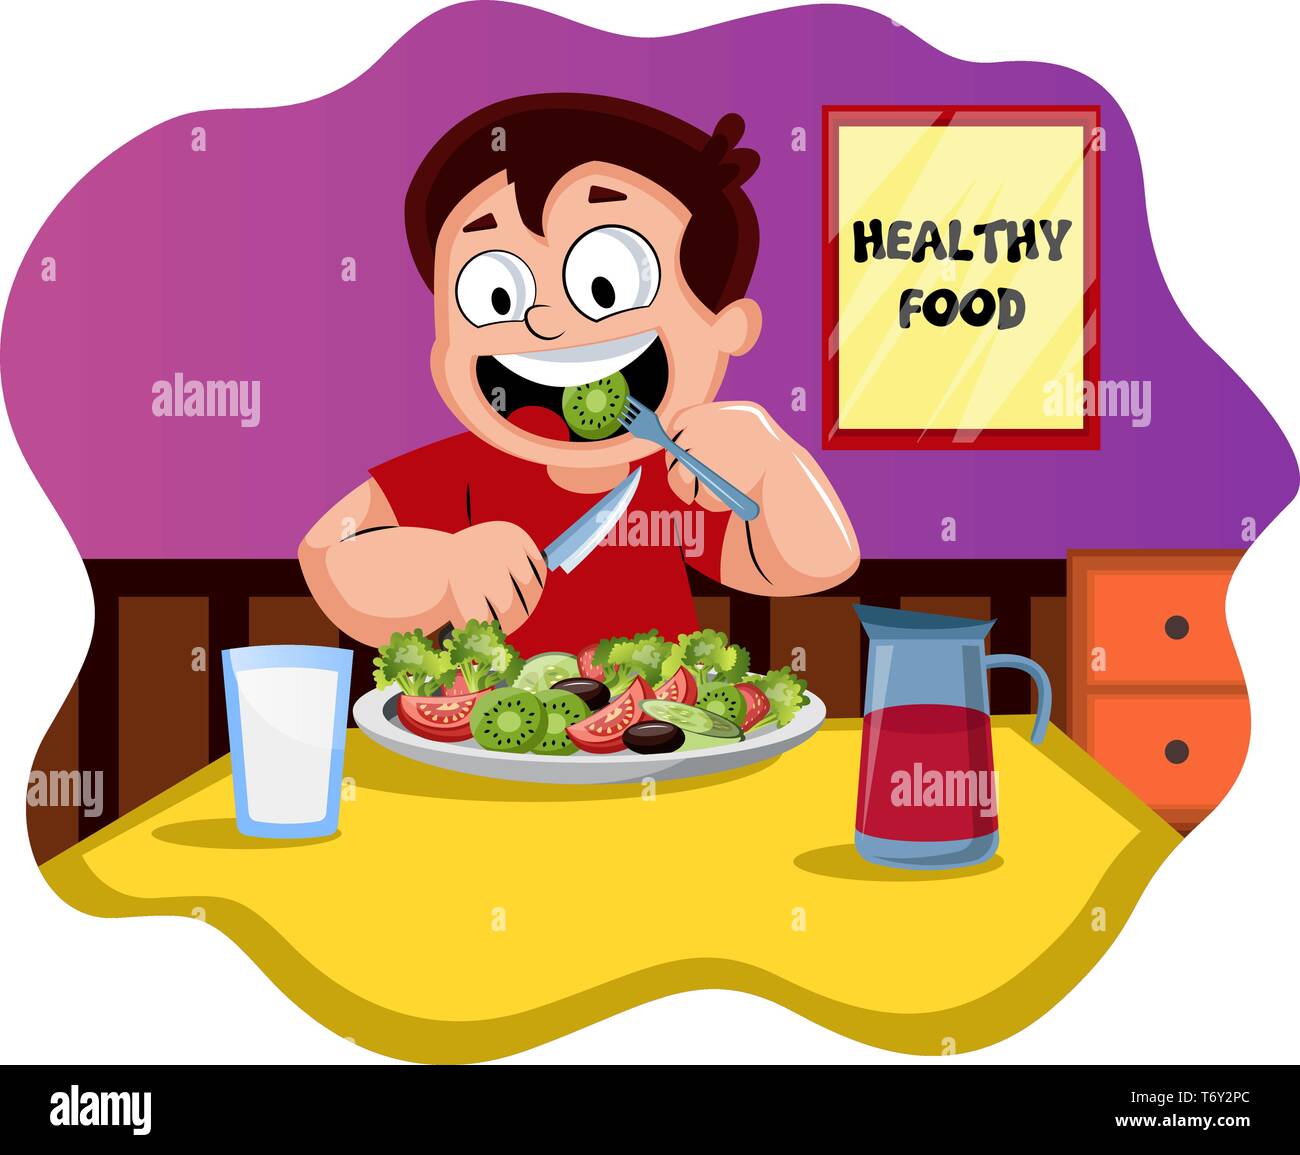 Nutrition Healthy Food Cartoon Images - Healthy Food | MissCab Tree